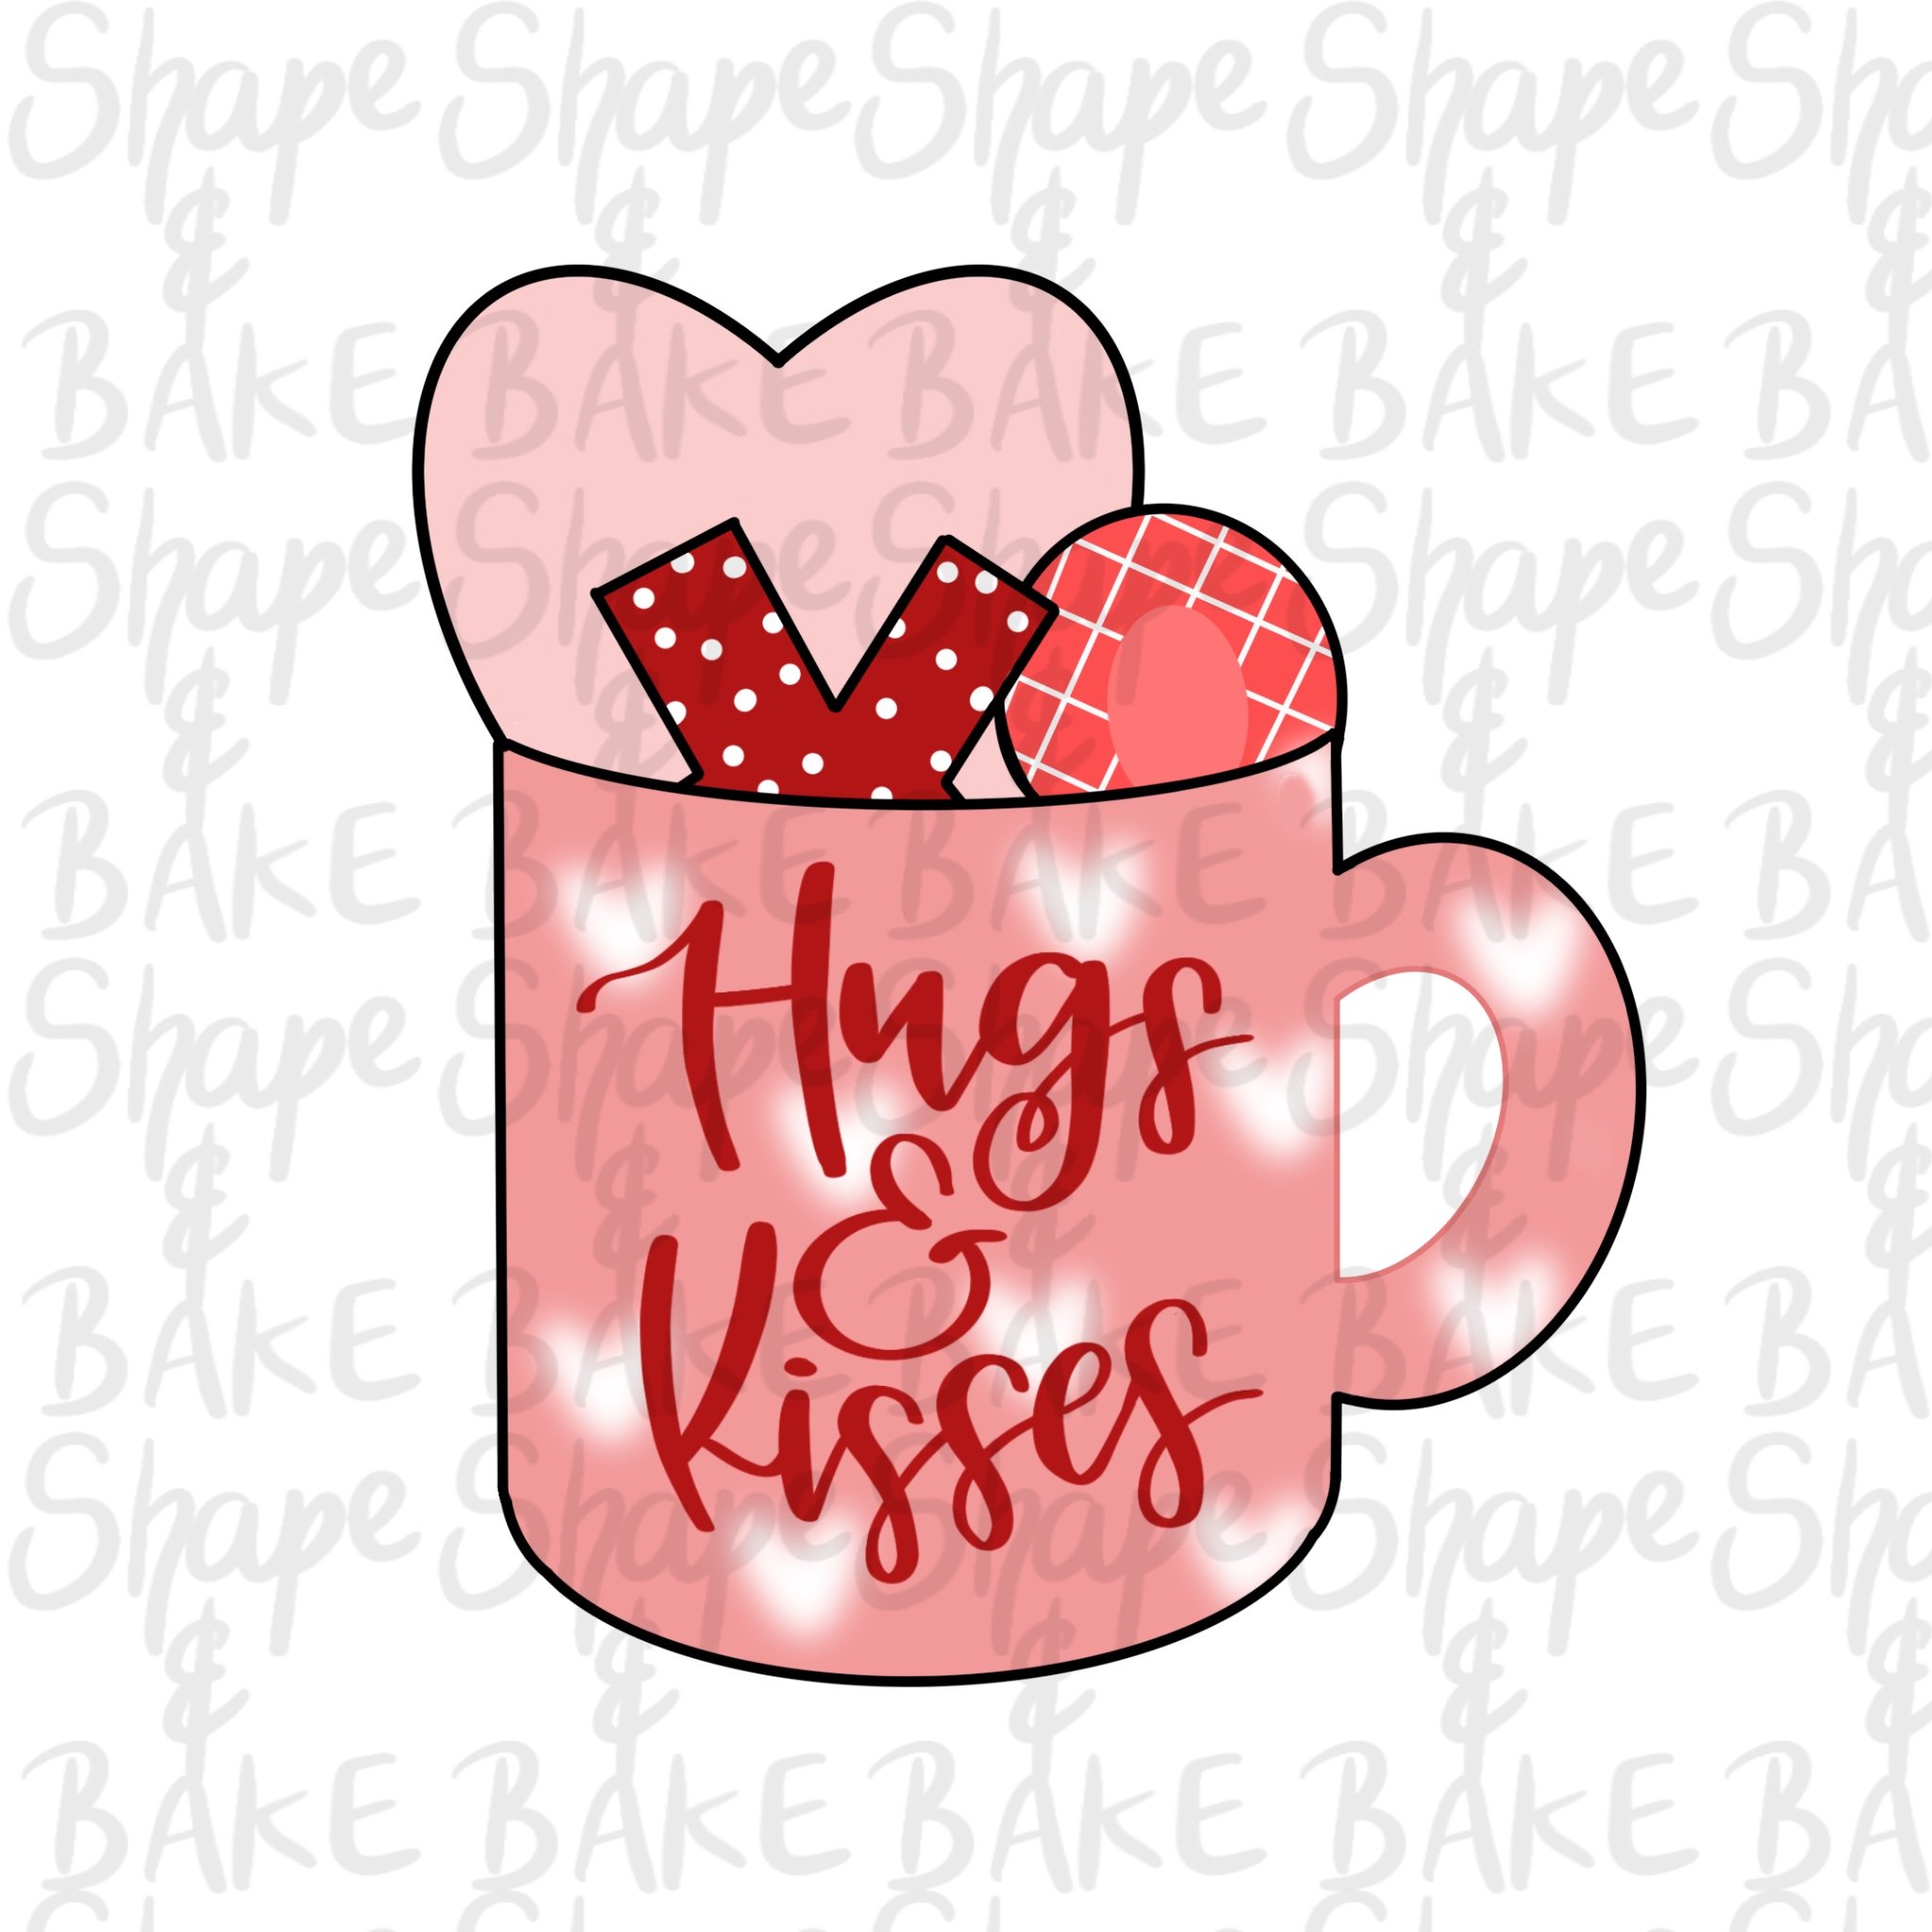 Hugs & kisses mug cookie cutter – Shape and Bake